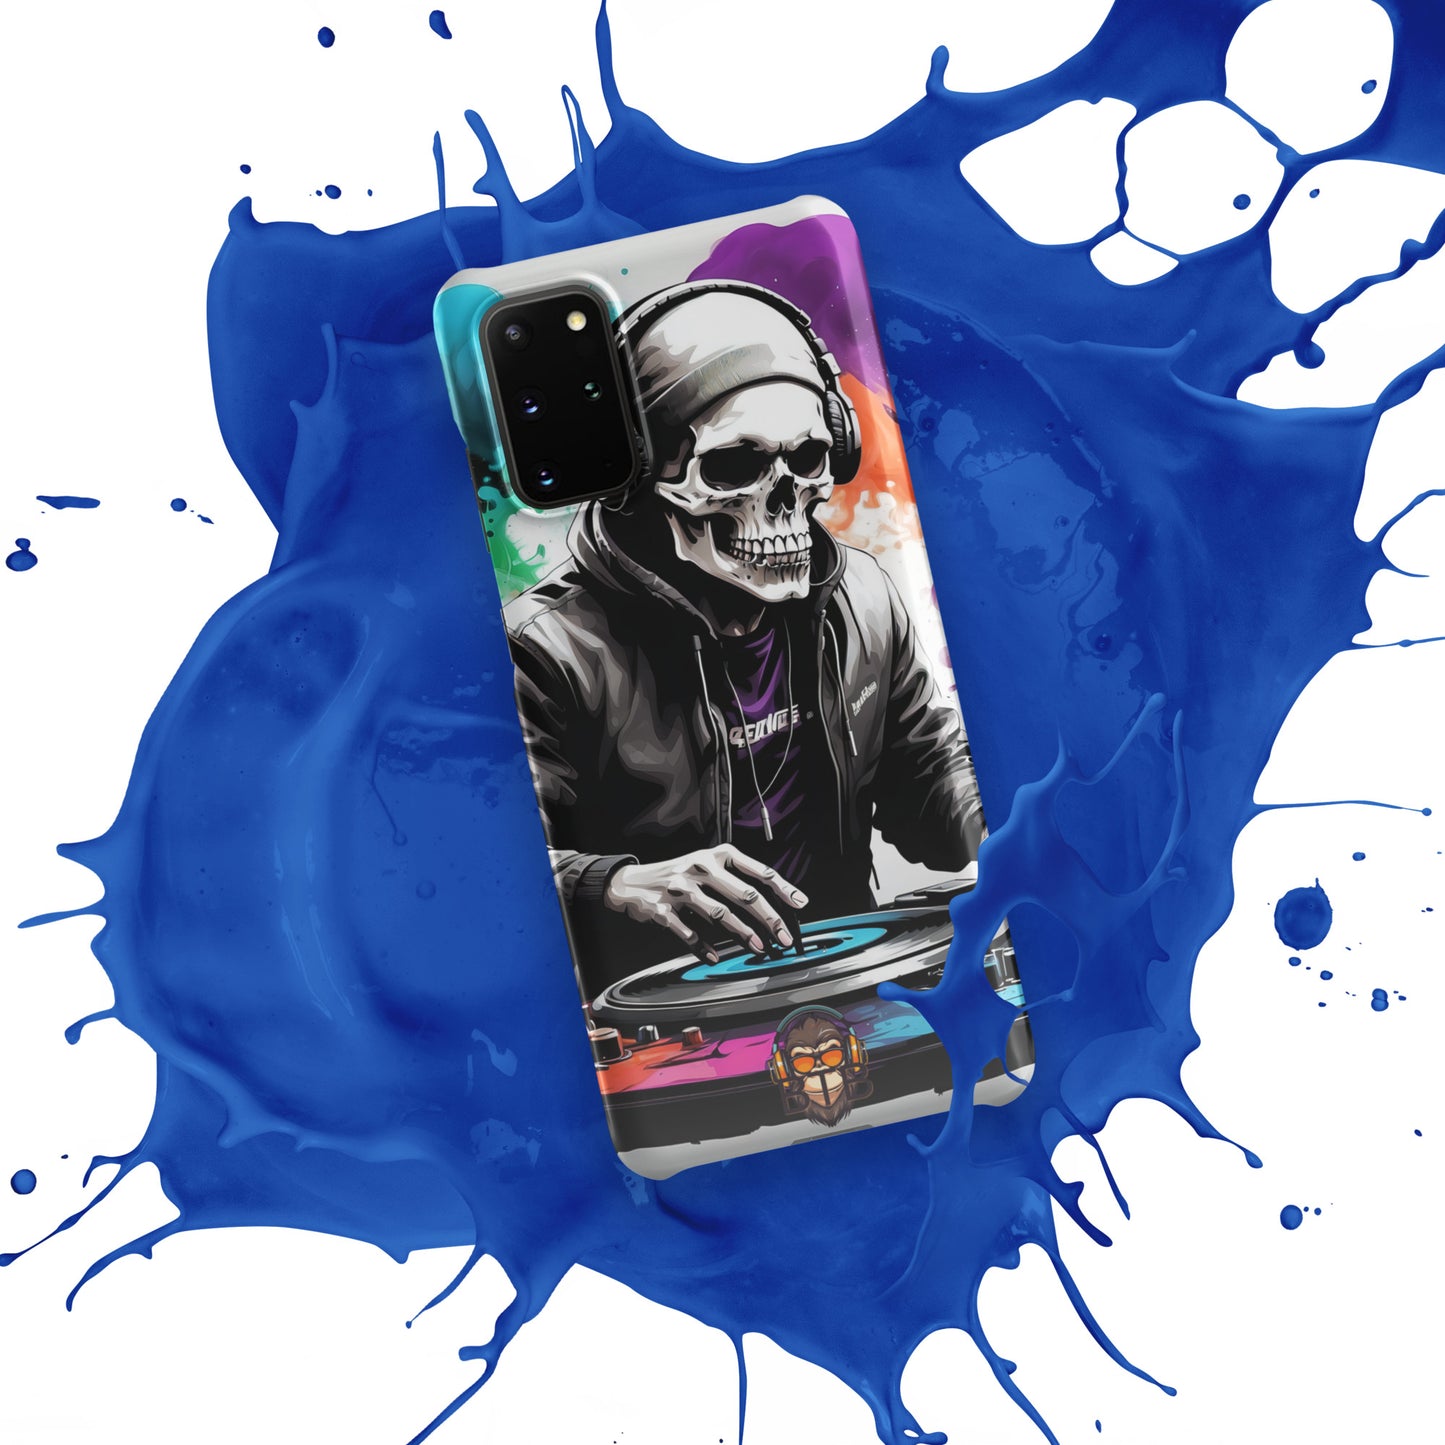 BTB "Deadly DJ" Snap case for Samsung®